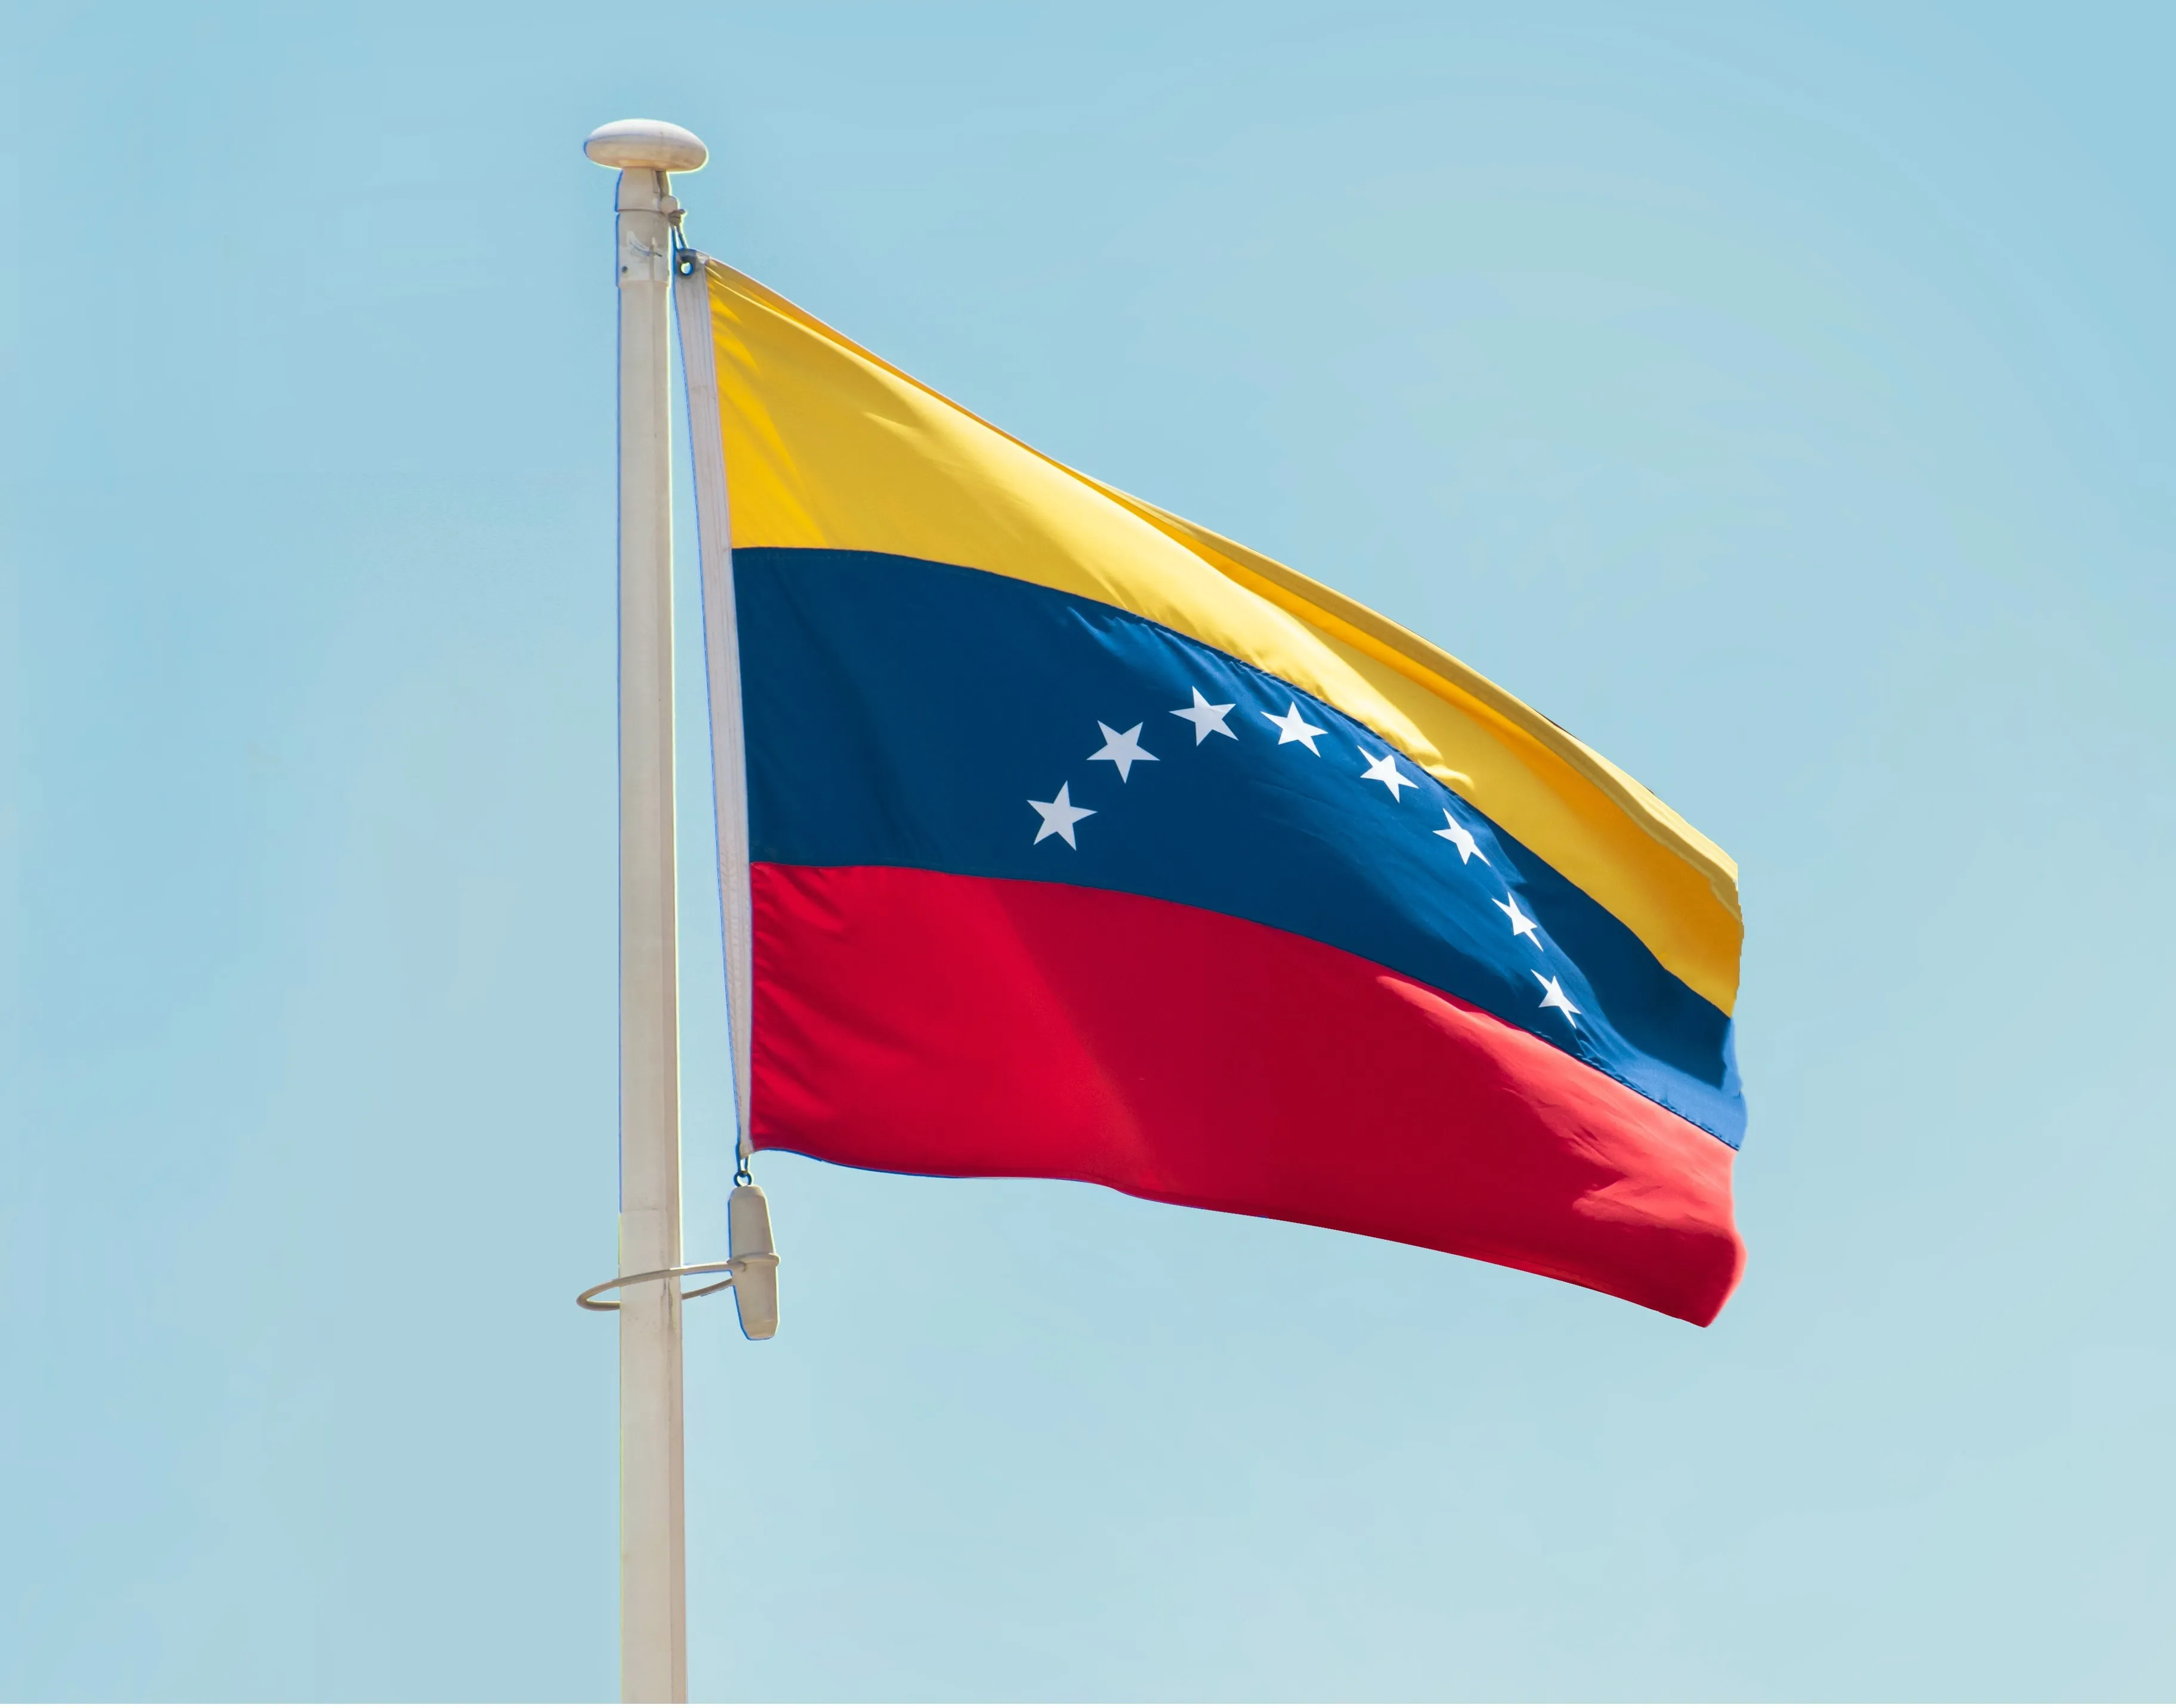 bandera Venezuela